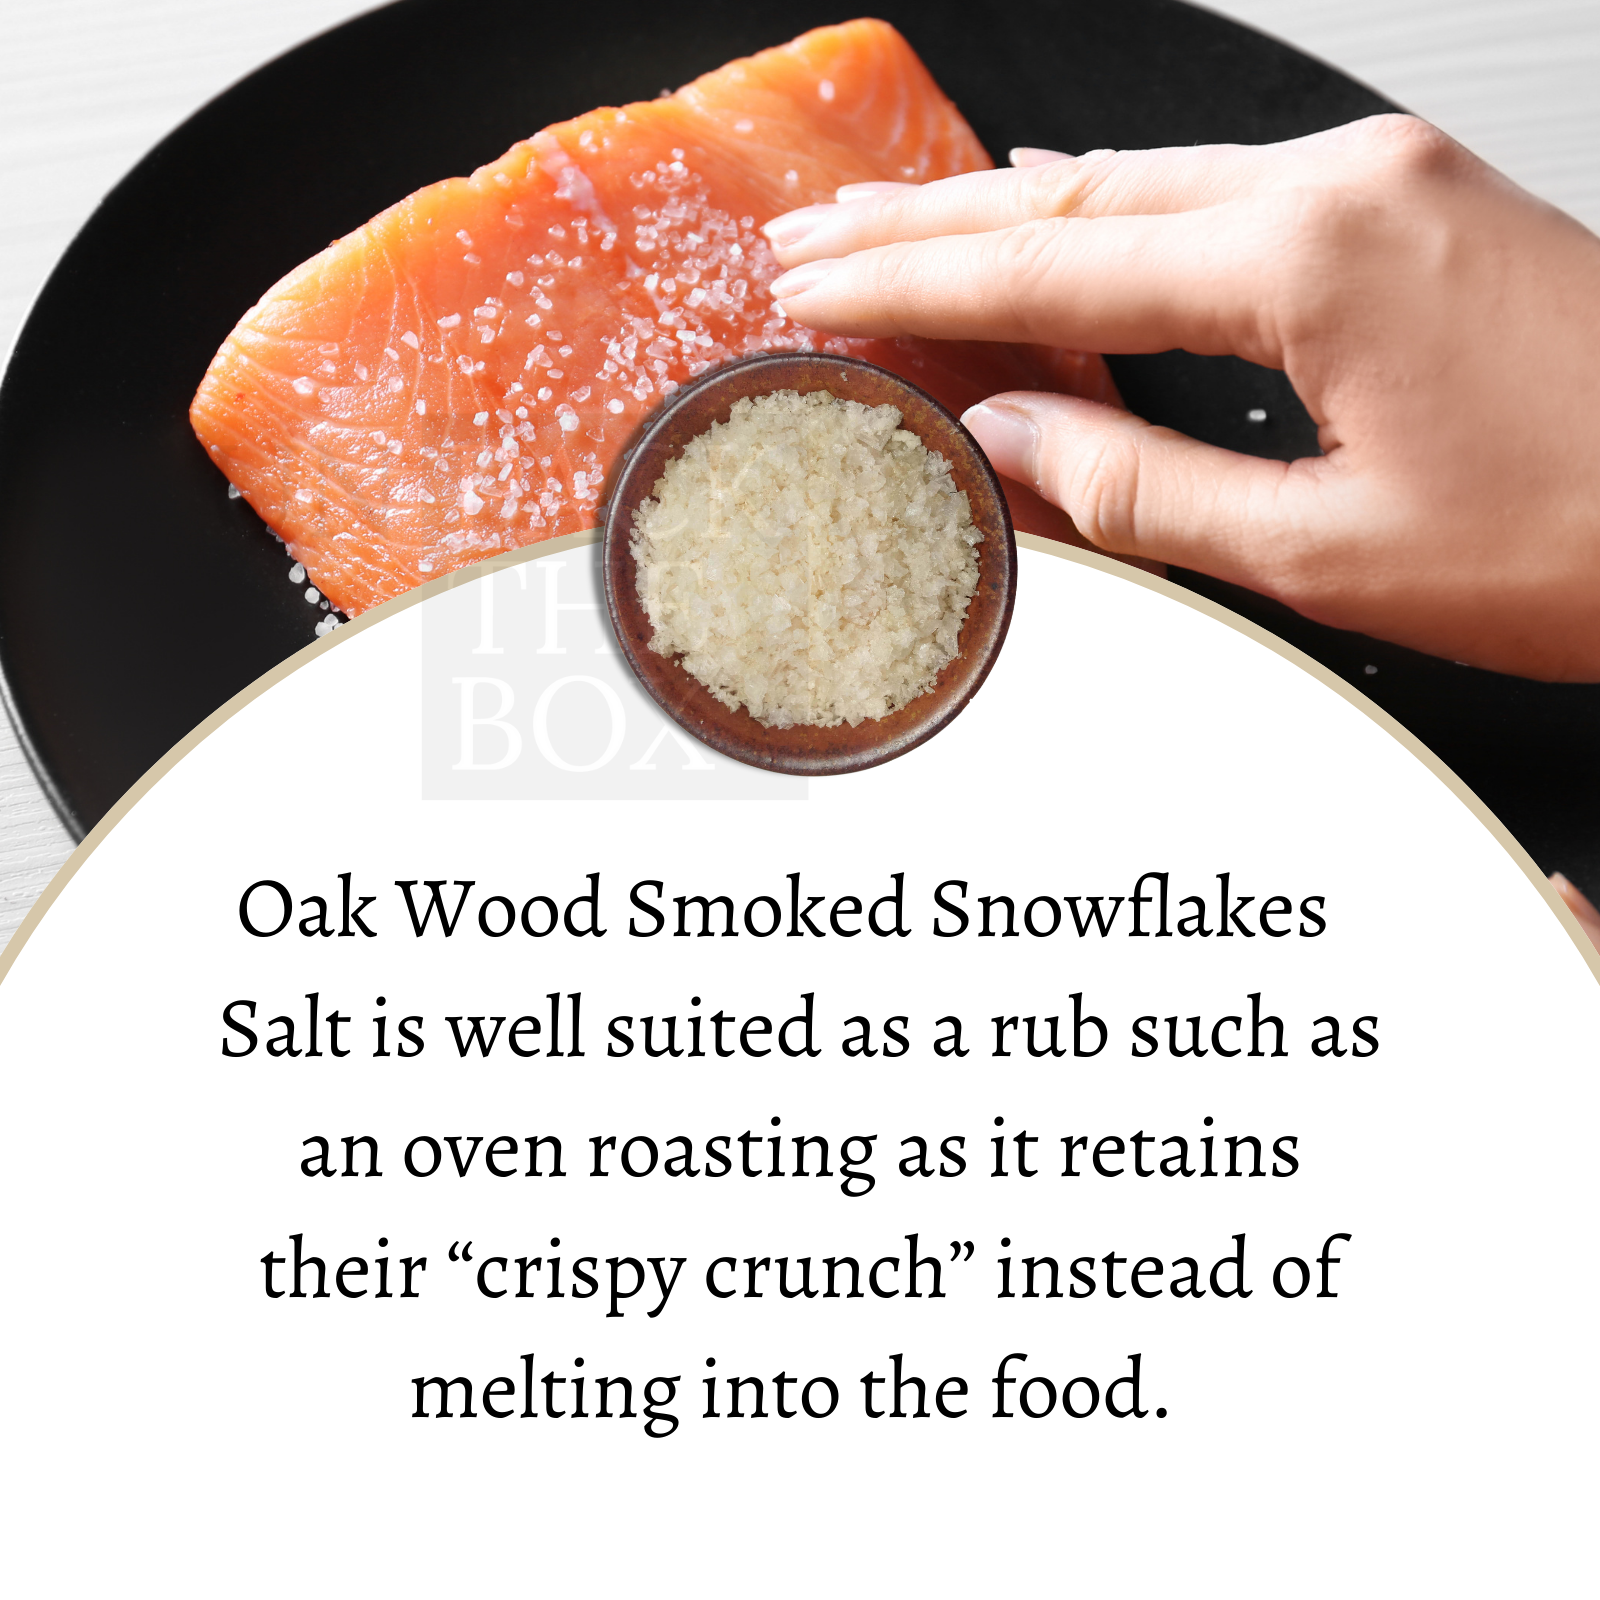 Baker & Baker Gourmet Snowflake Salt Oak Wood is well suited as rub such as an oven roasting, retains crispy crunch